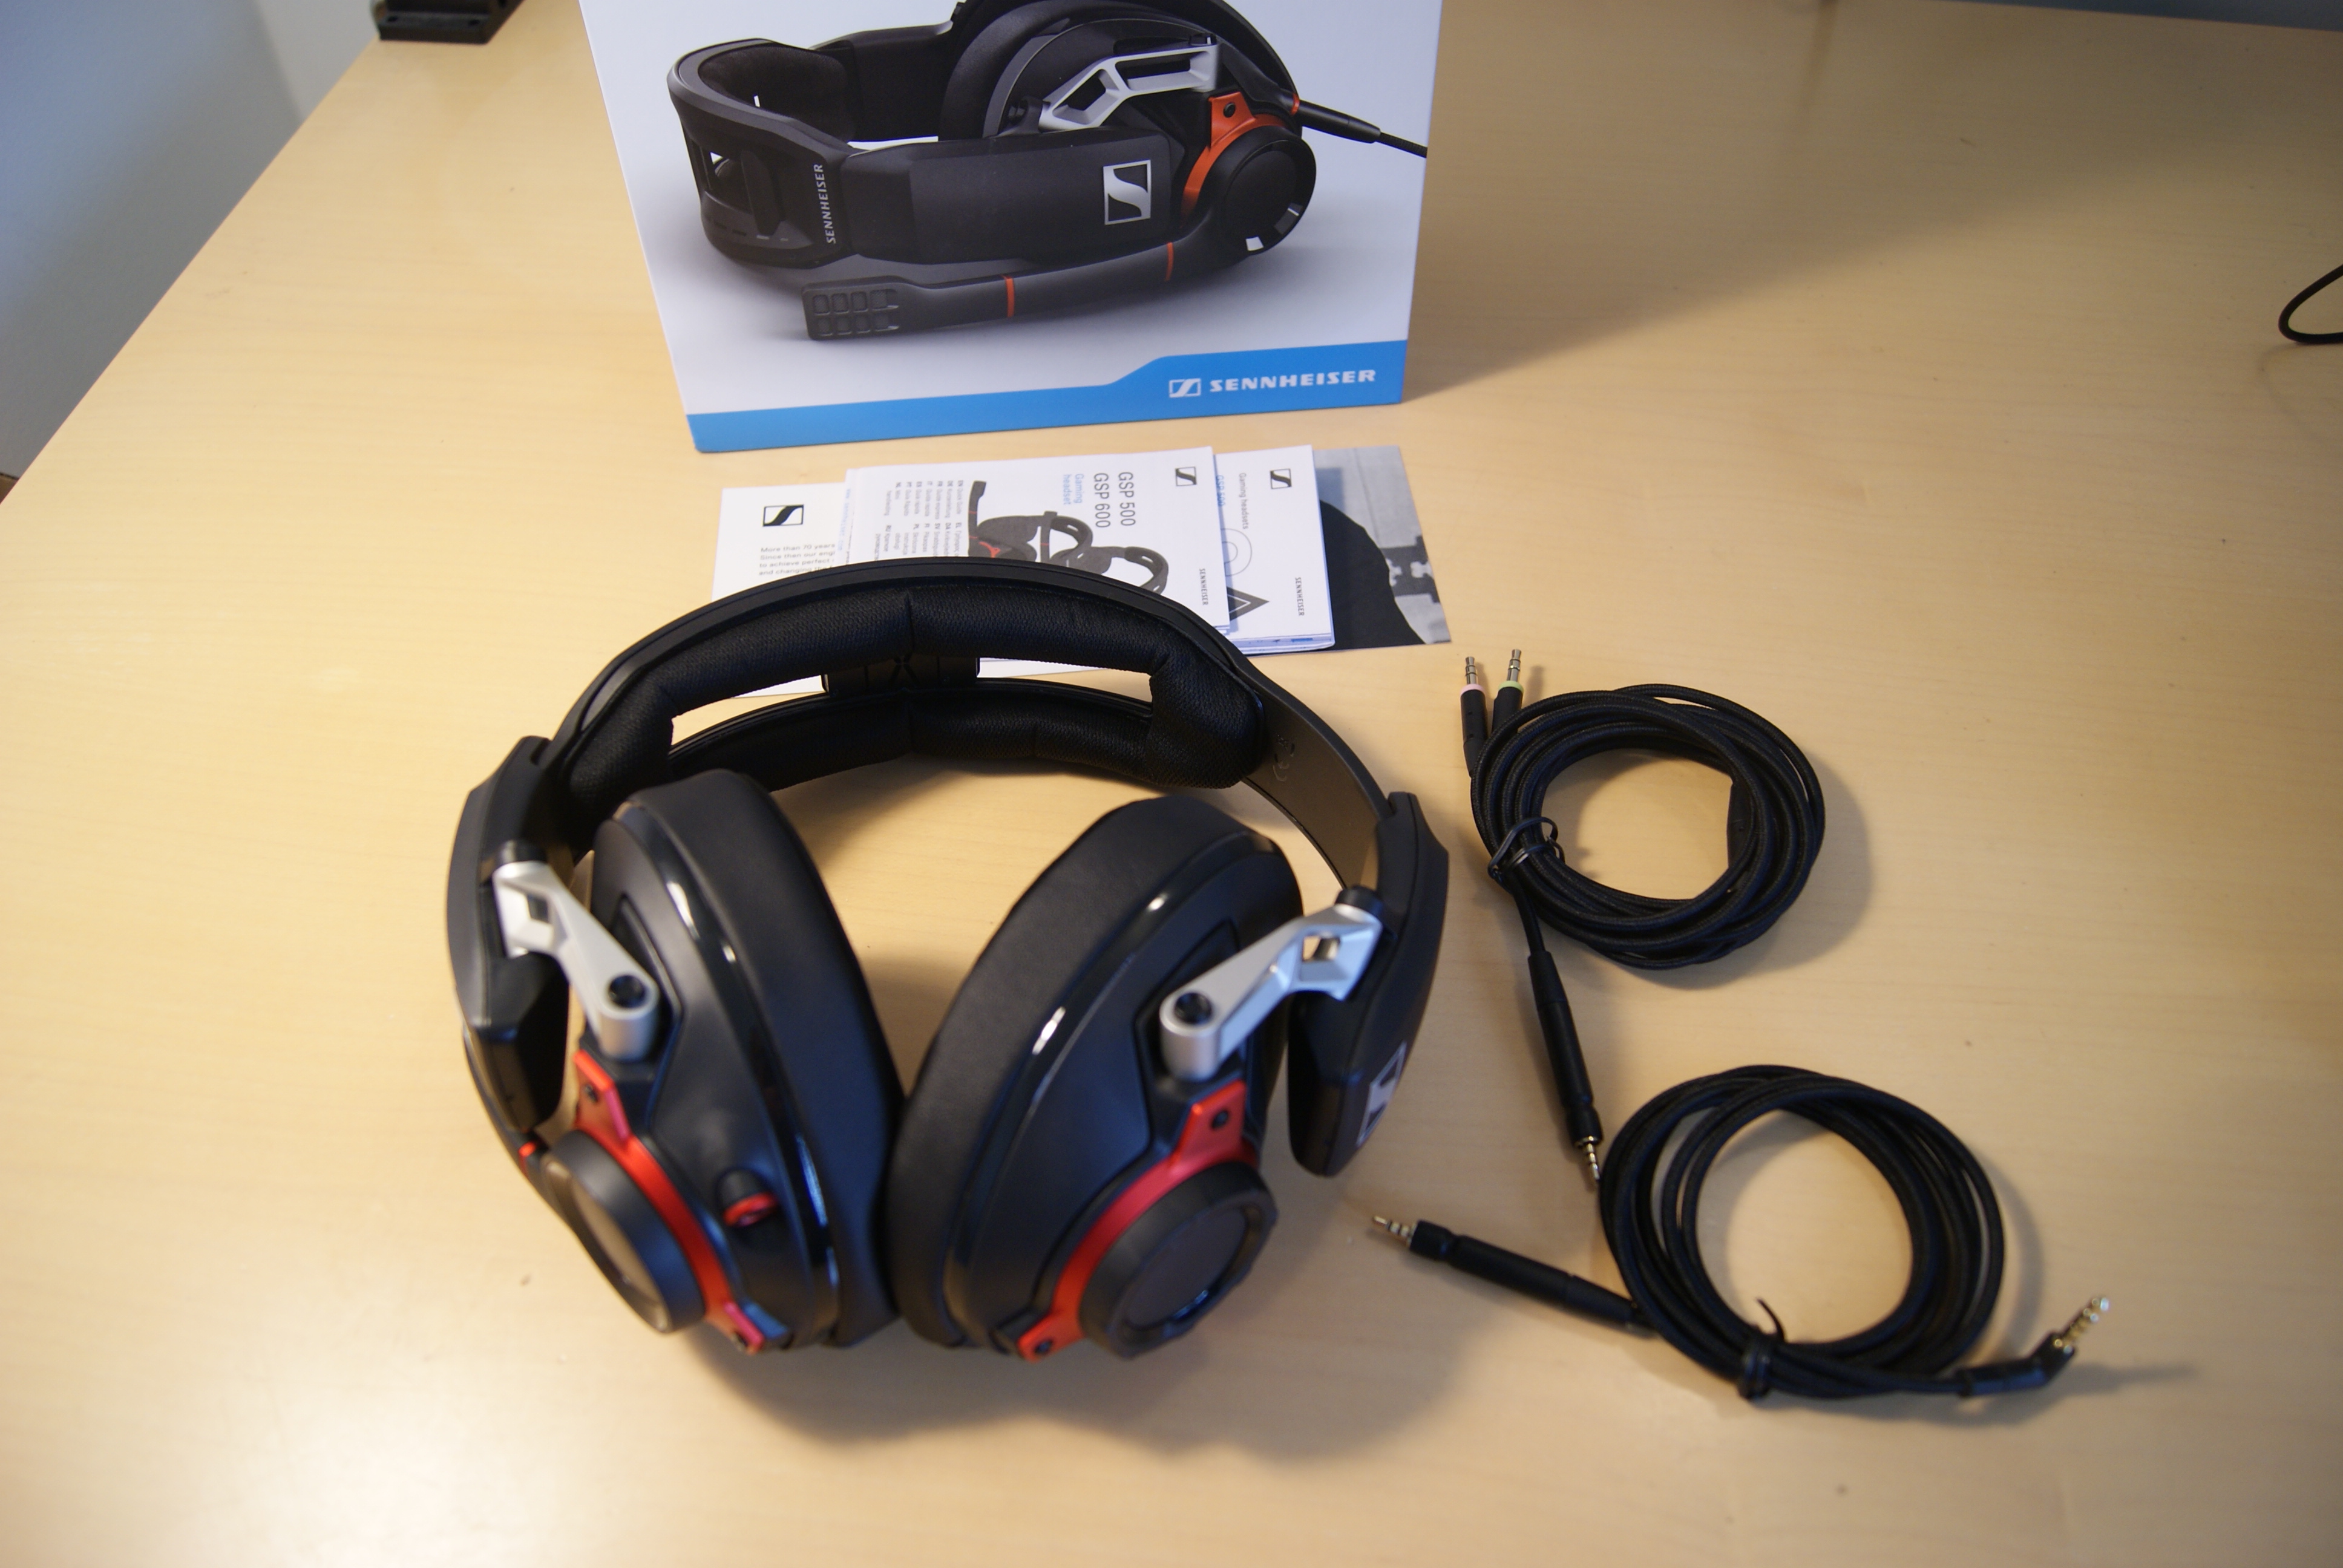 Test: Sennheiser GSP 600 professional gaming headset | eReviews.dk